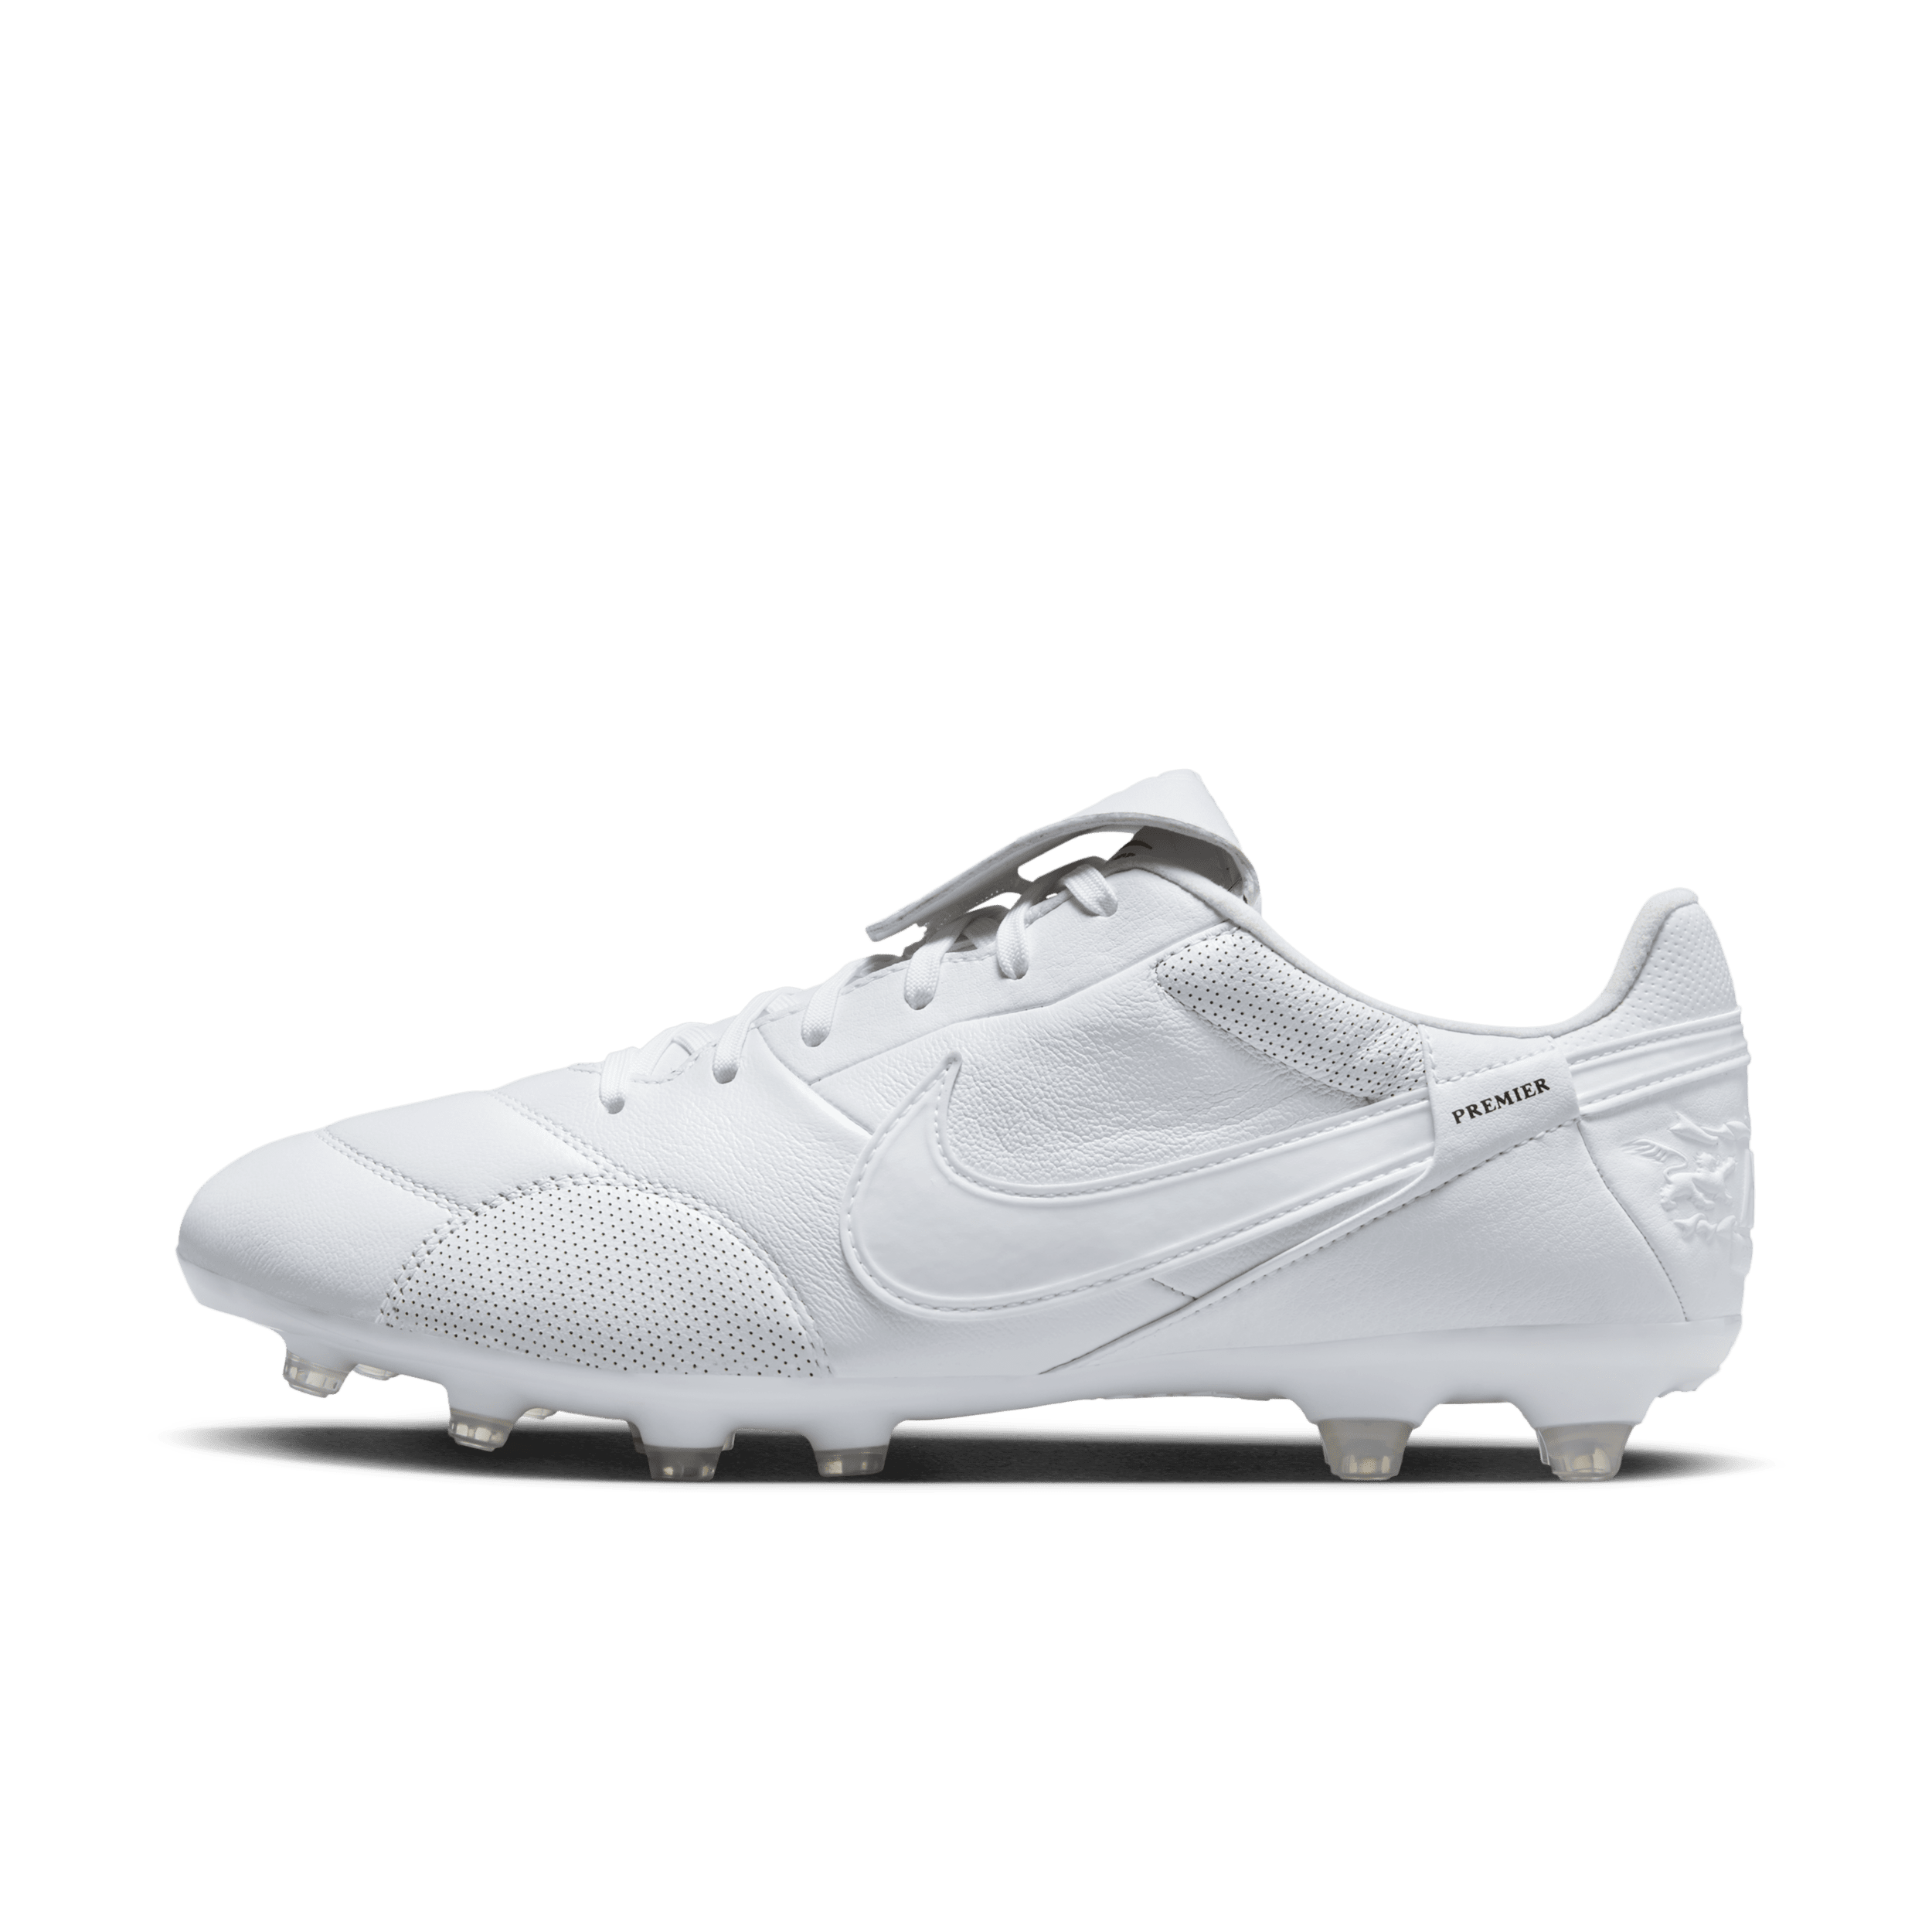 NikePremier 3 voetbalschoen (stevige ondergrond) - Wit